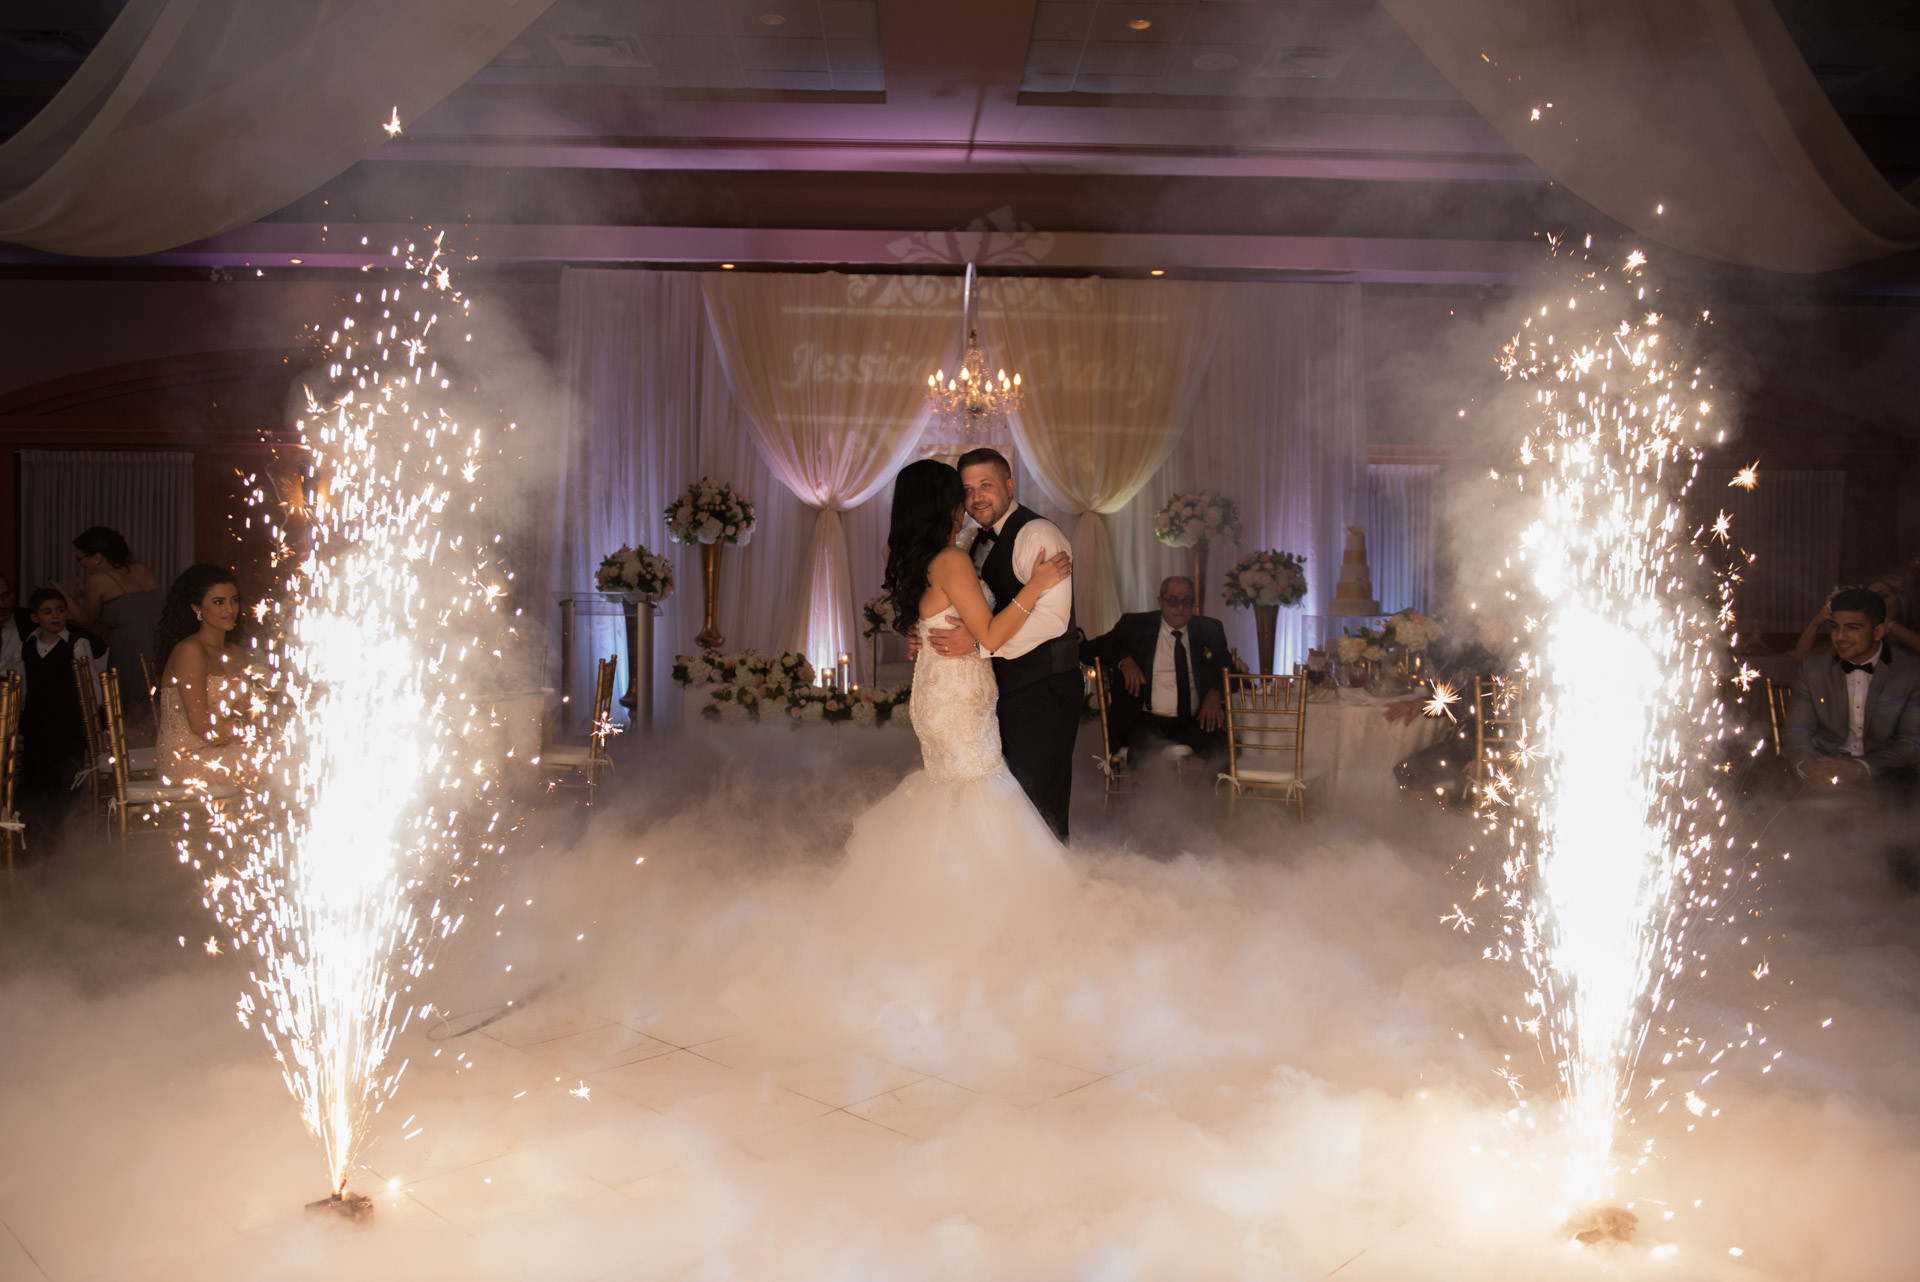 Indoor Sparklers For Wedding
 Sparklers Indoor Pyrotechnics SAFE INDOORS